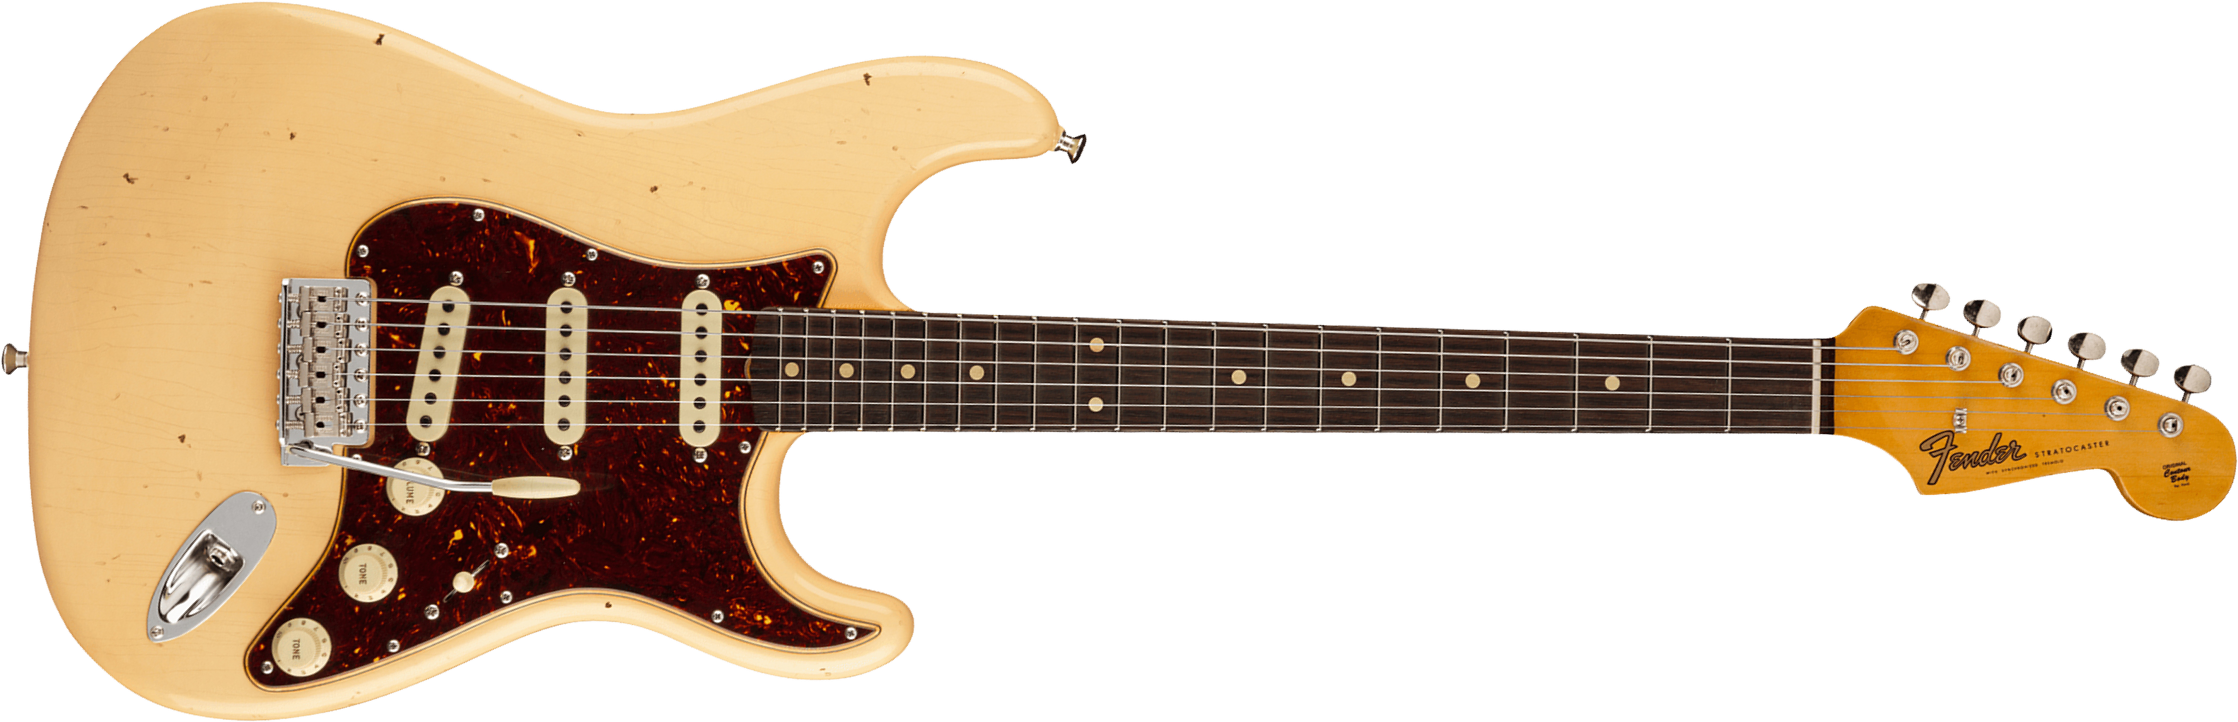 Fender Custom Shop Strat Postmodern Usa Rw - Journeyman Relic Vintage White - Str shape electric guitar - Main picture